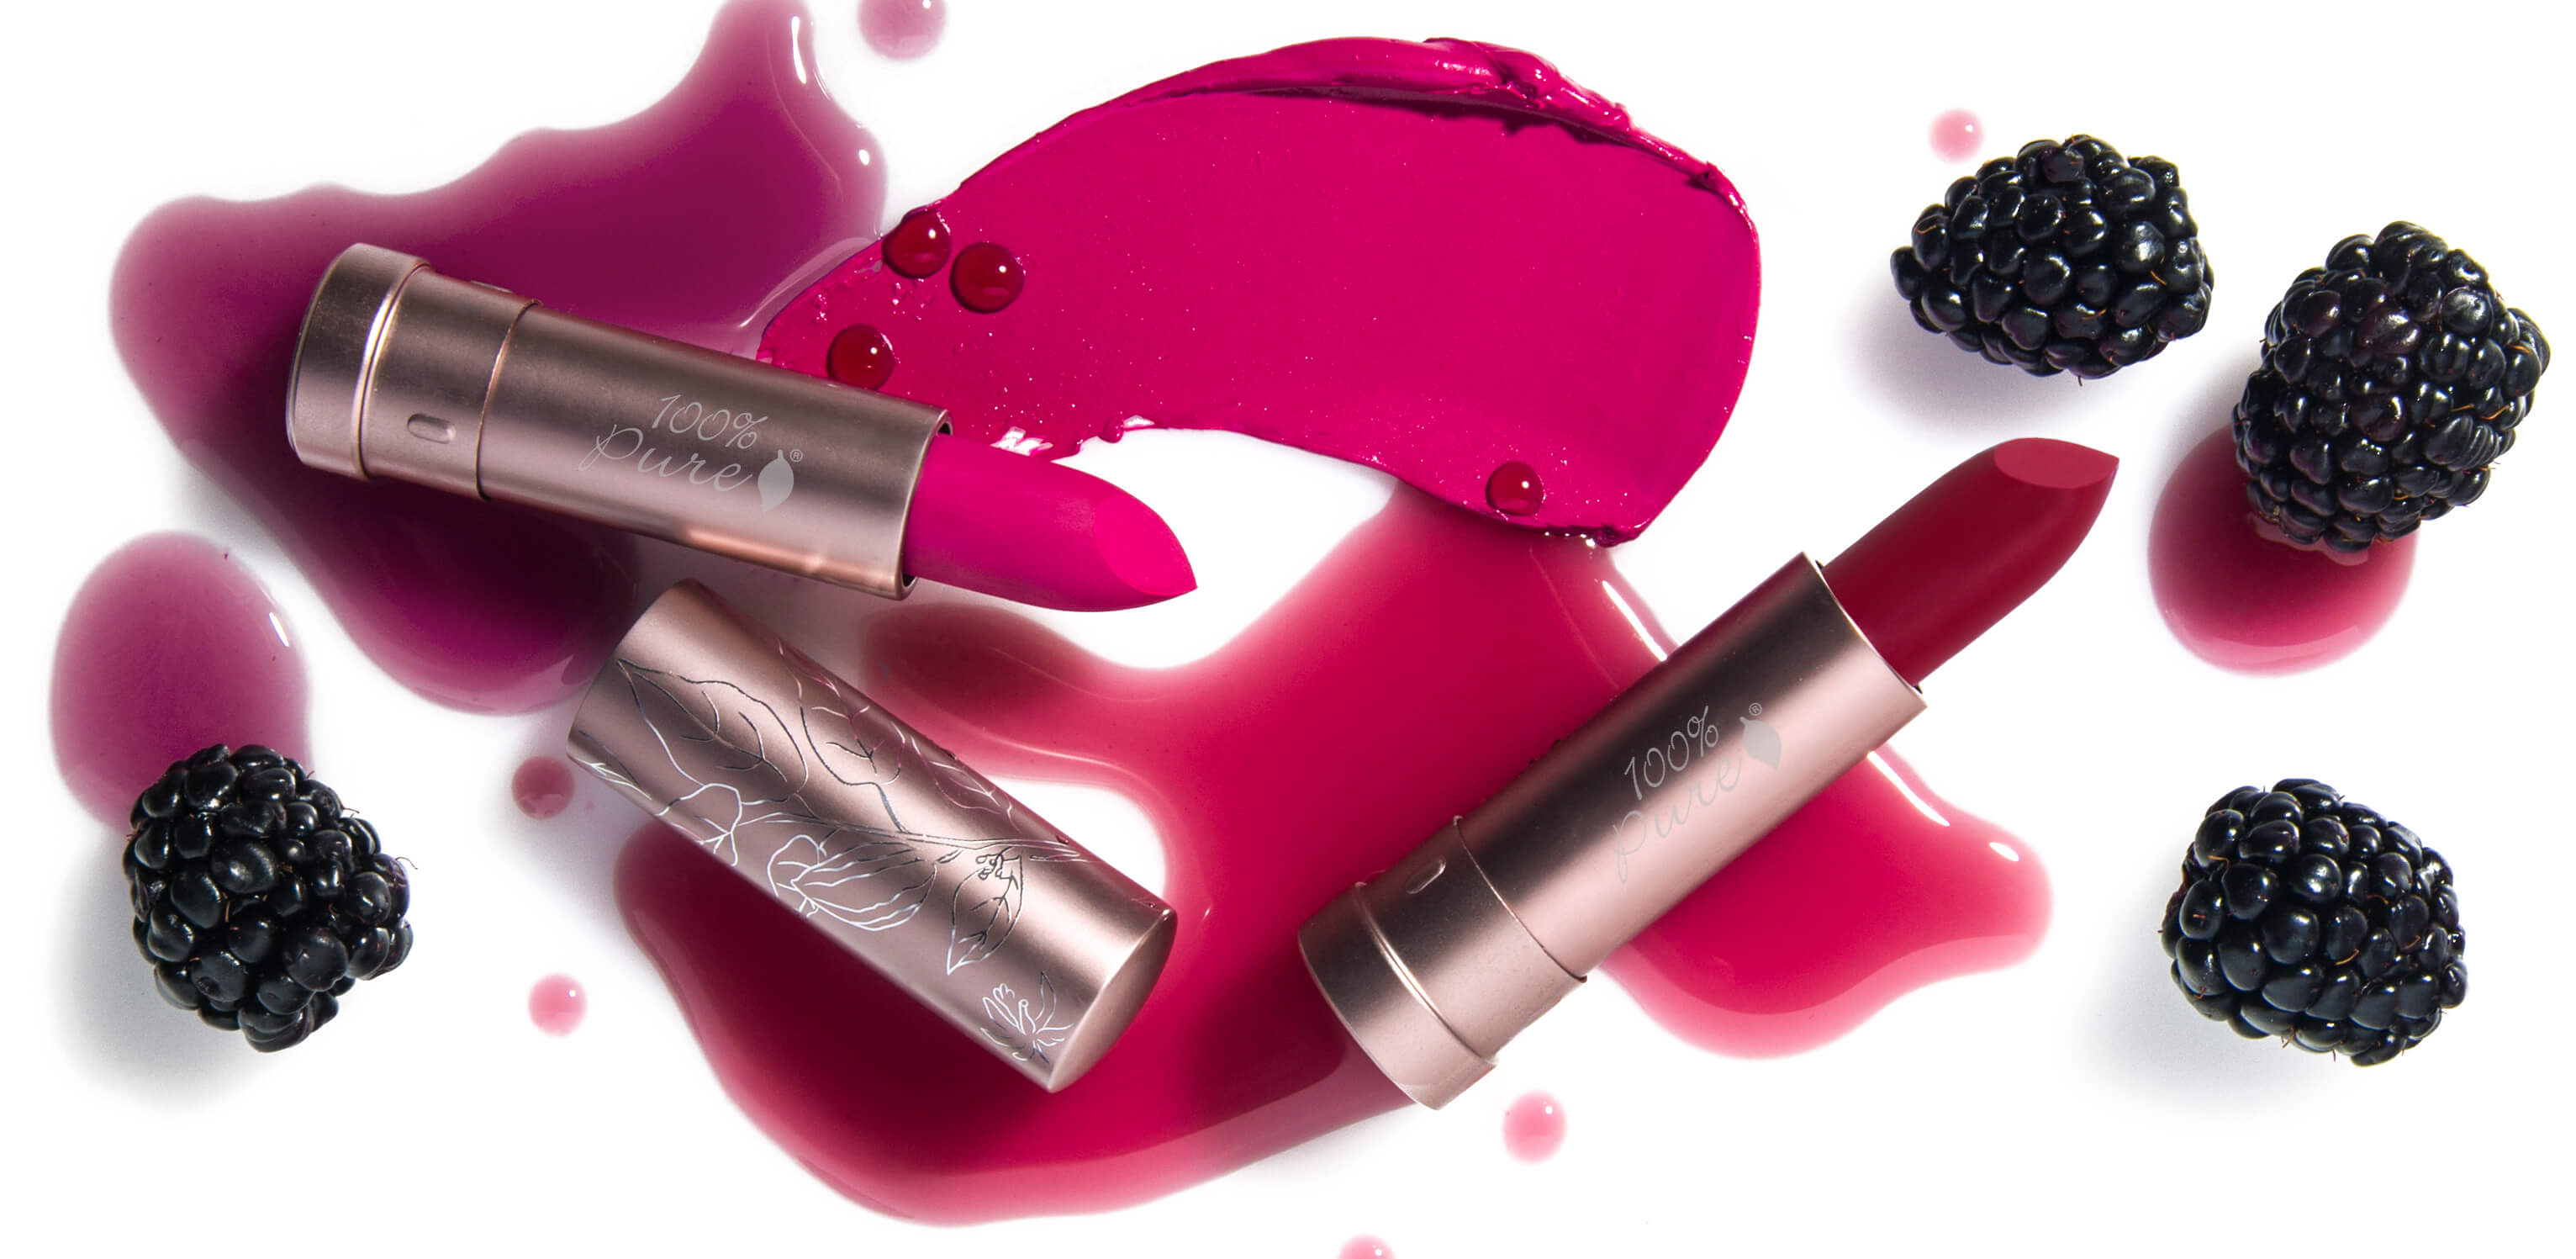 100% PURE Fruit pigmented matte lipsticks